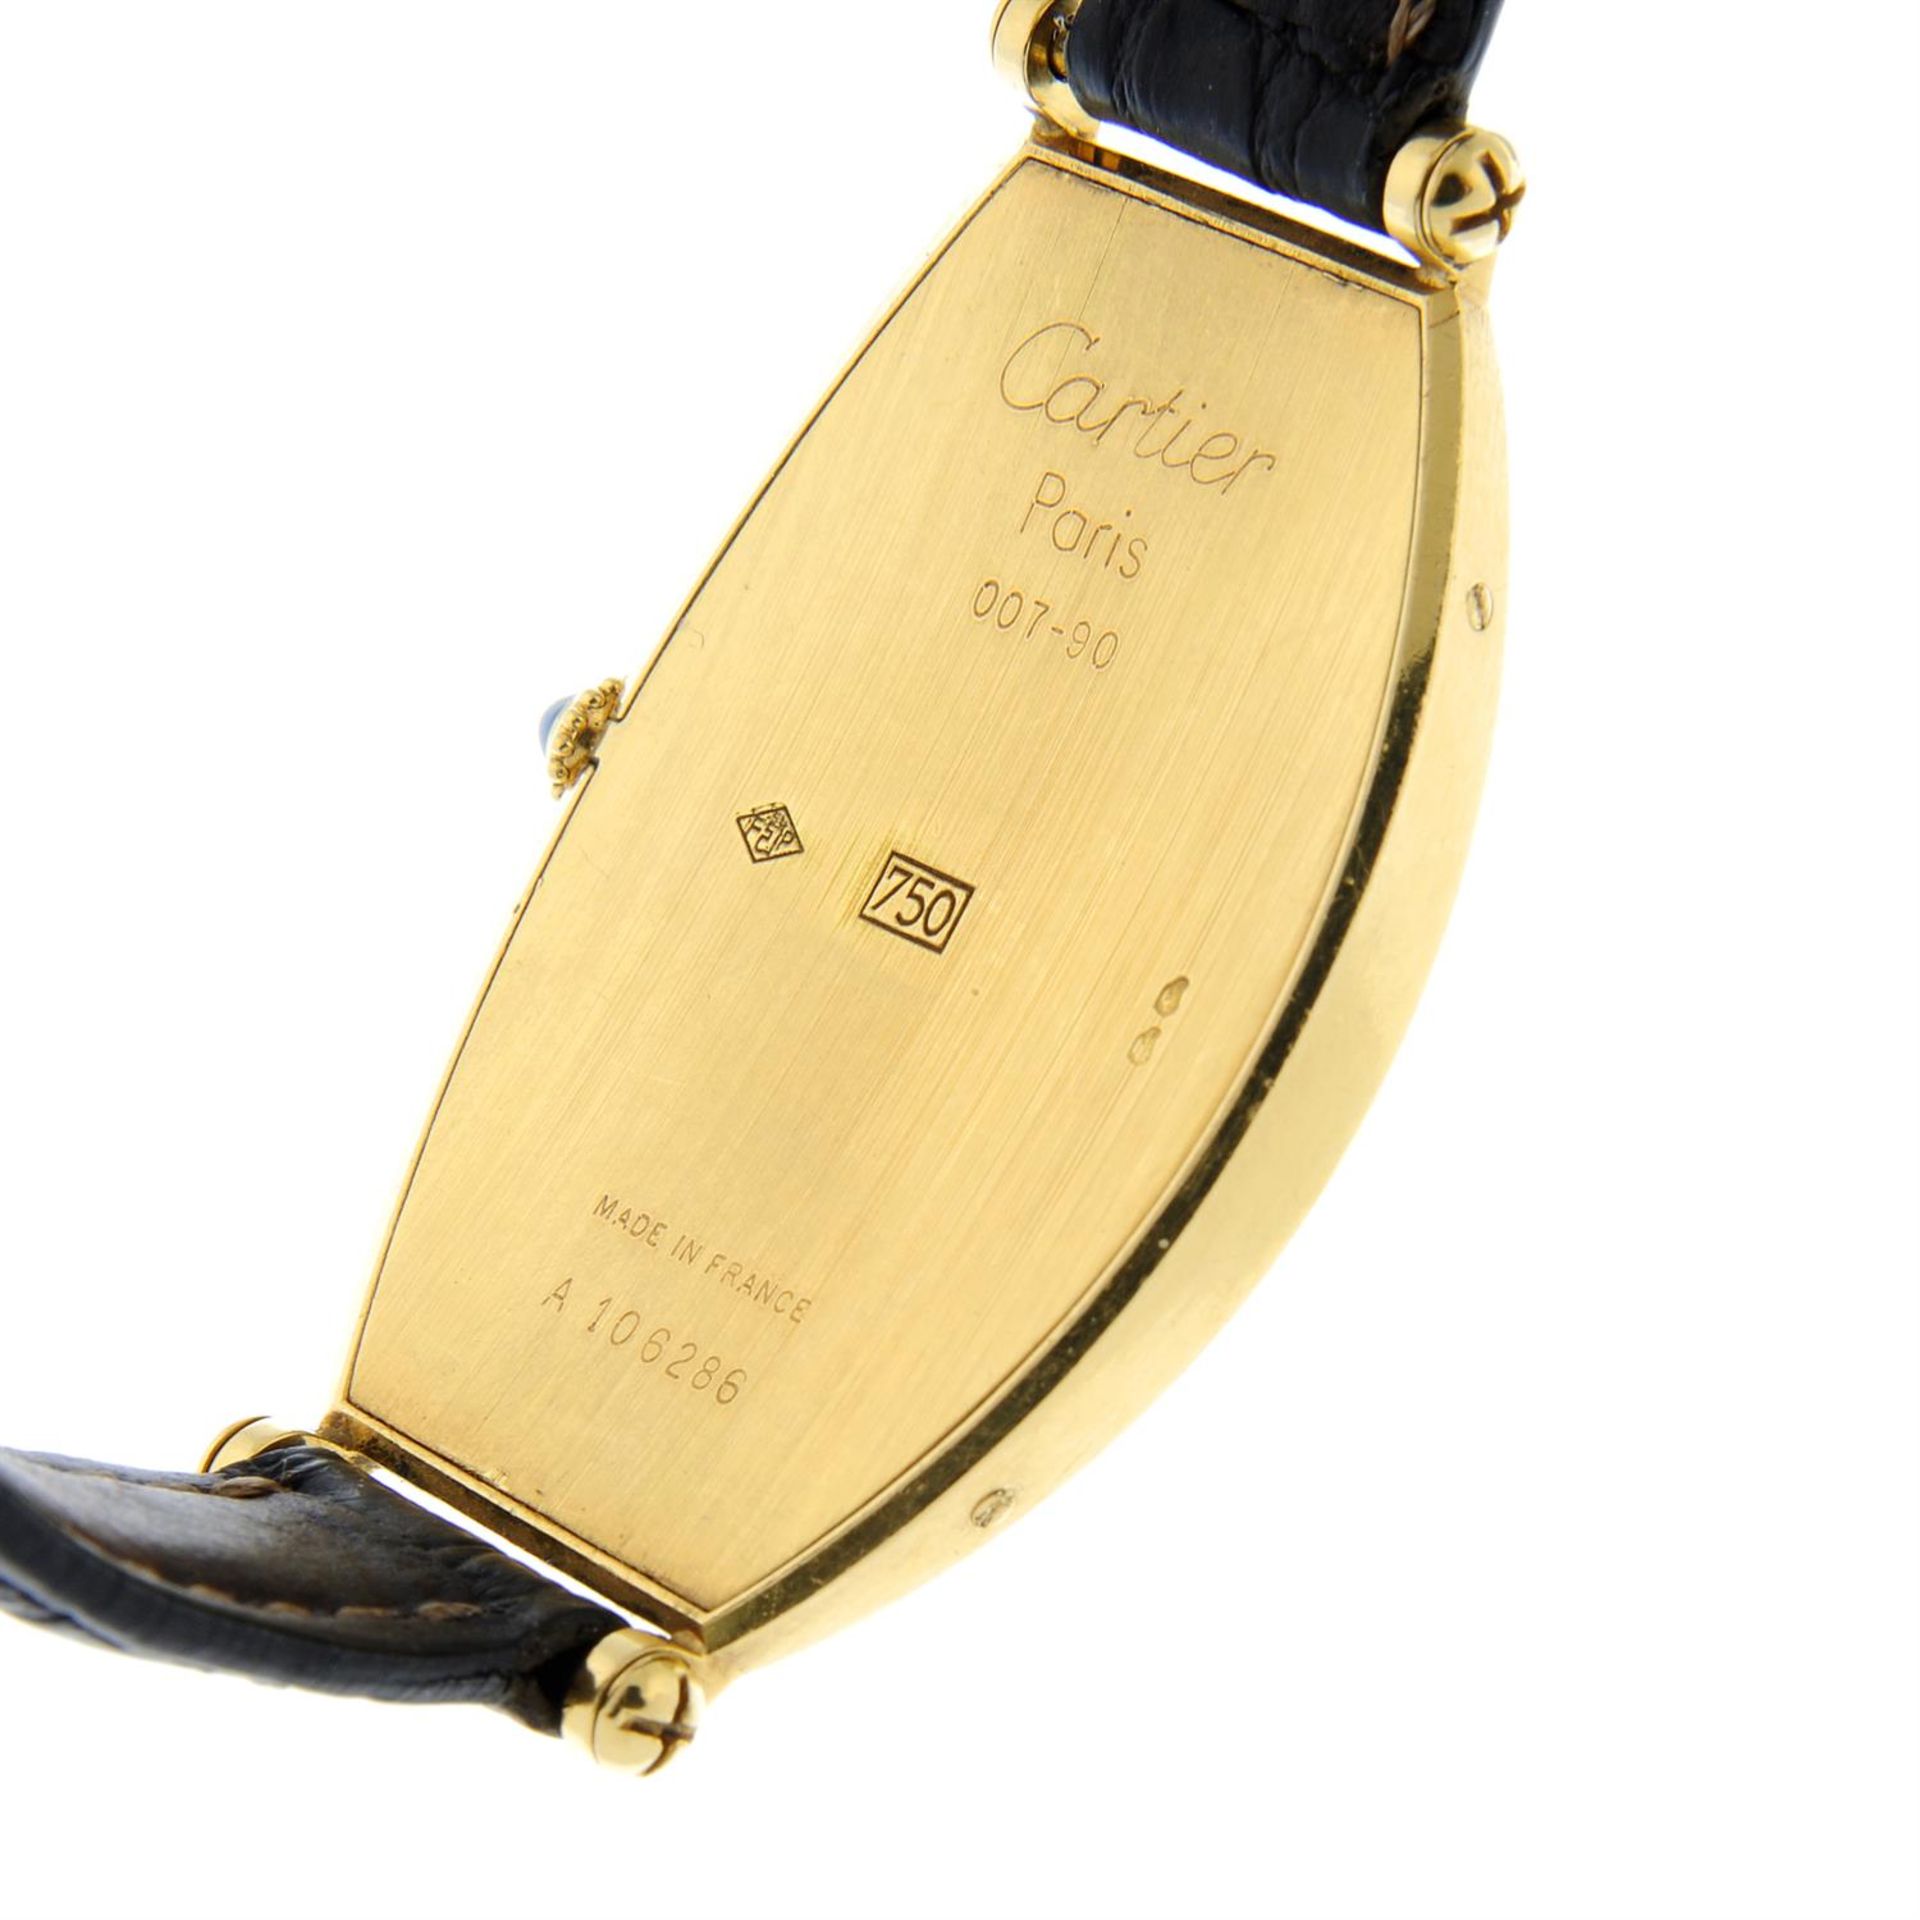 CARTIER - a yellow metal Tonneau wrist watch, 26x39mm. - Image 4 of 5